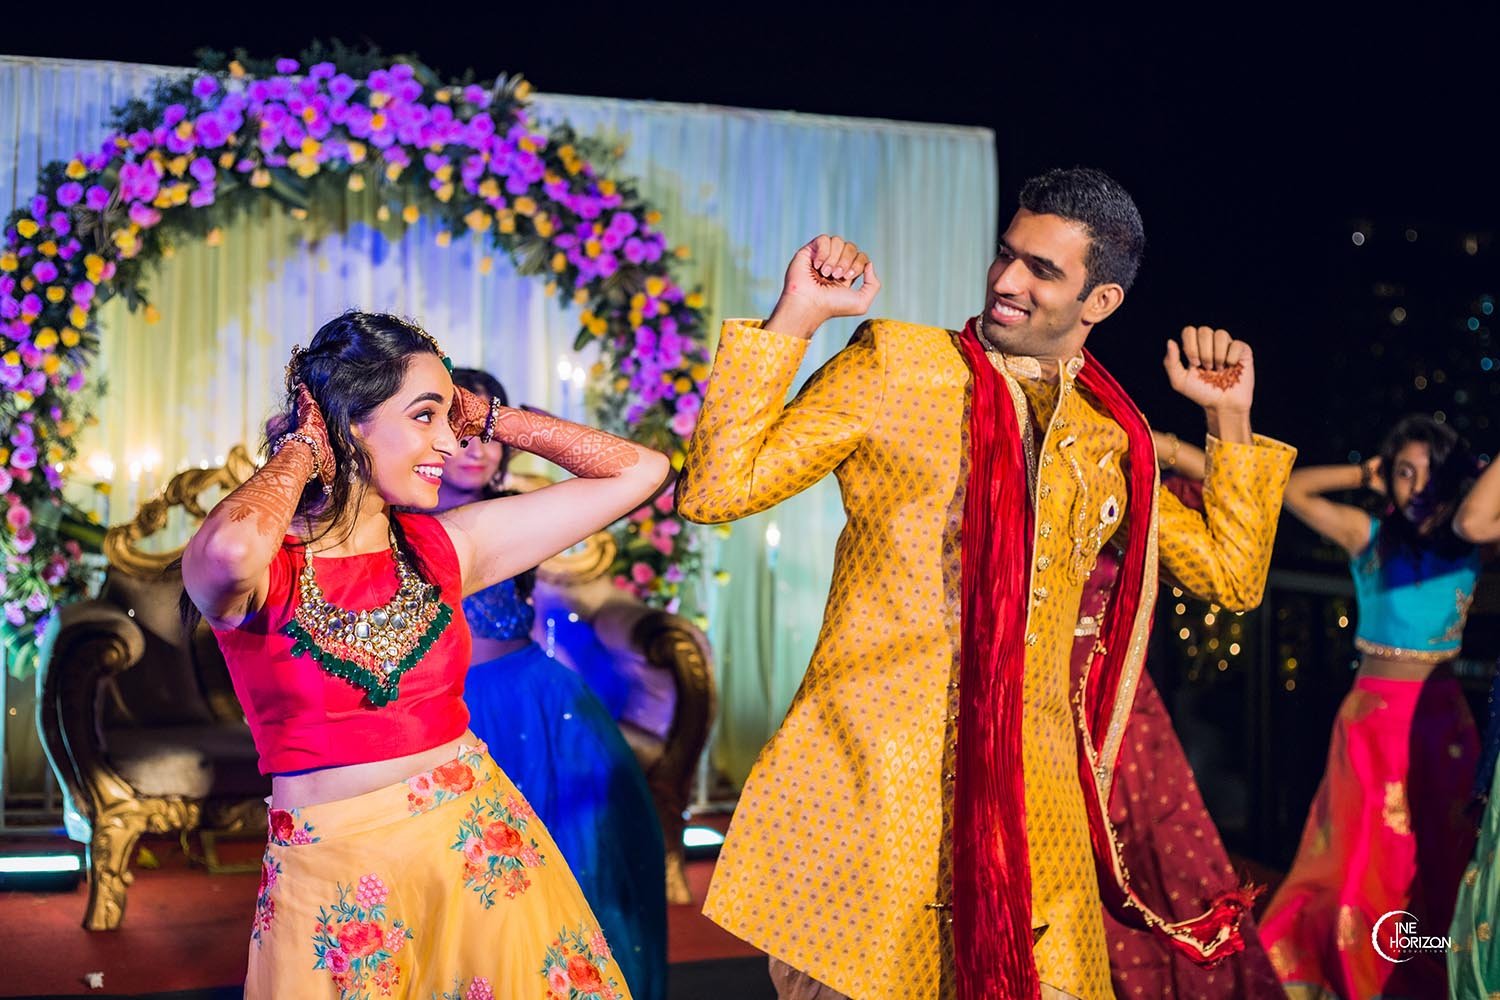 Tamil wedding | Indian wedding poses, Indian wedding photography poses,  Indian wedding photography couples